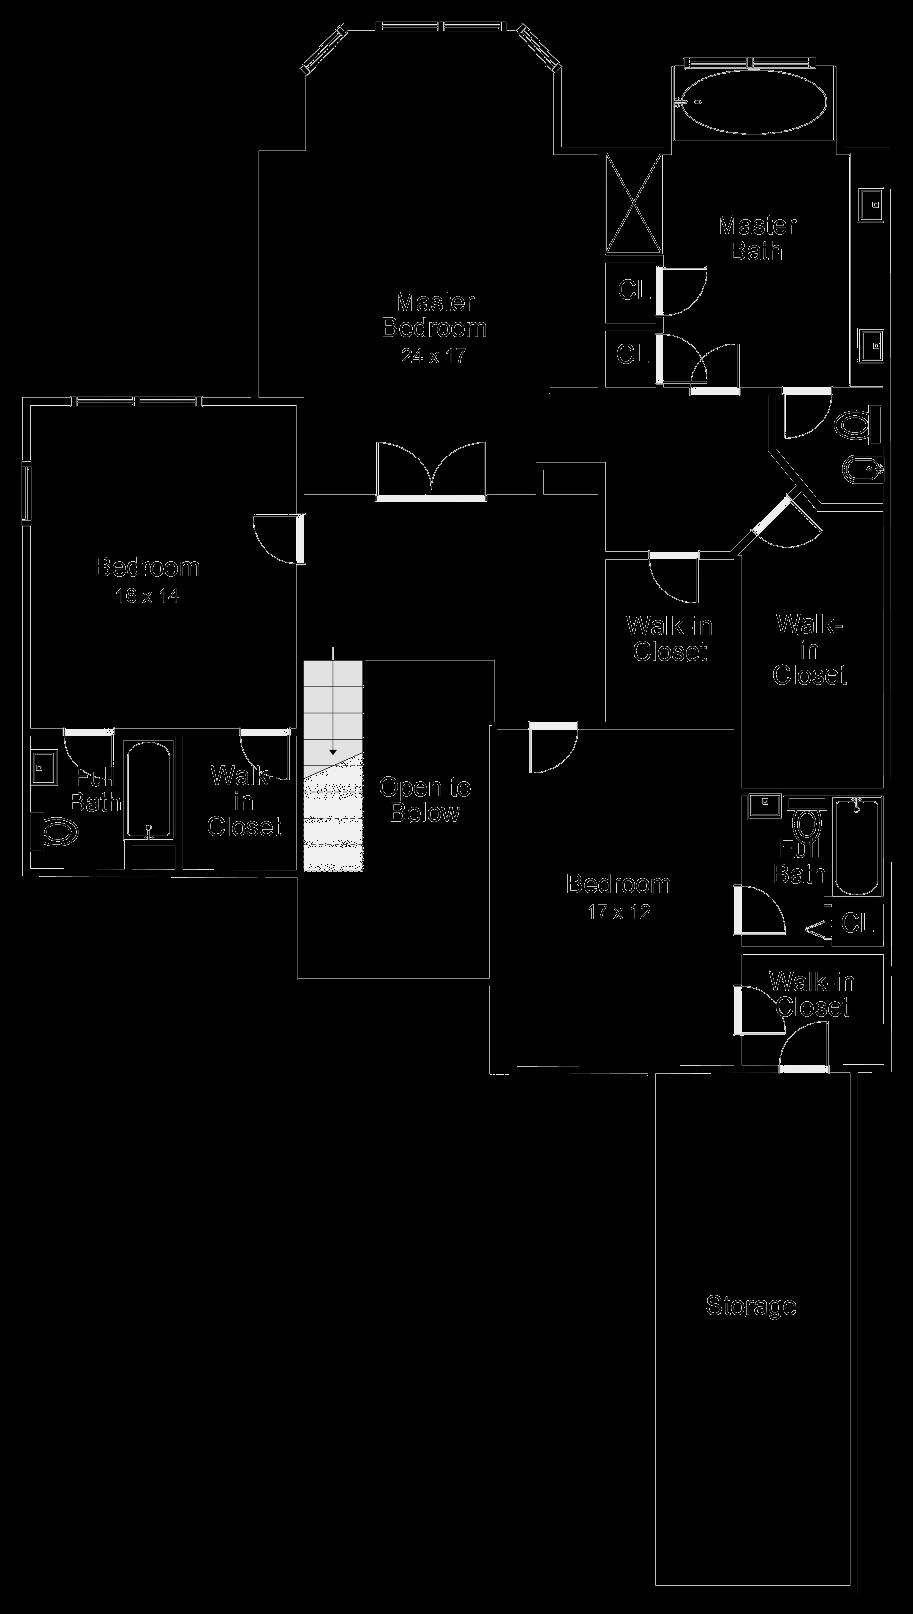 Floor Plans Level 2 Floor plan for illustration purposes only.